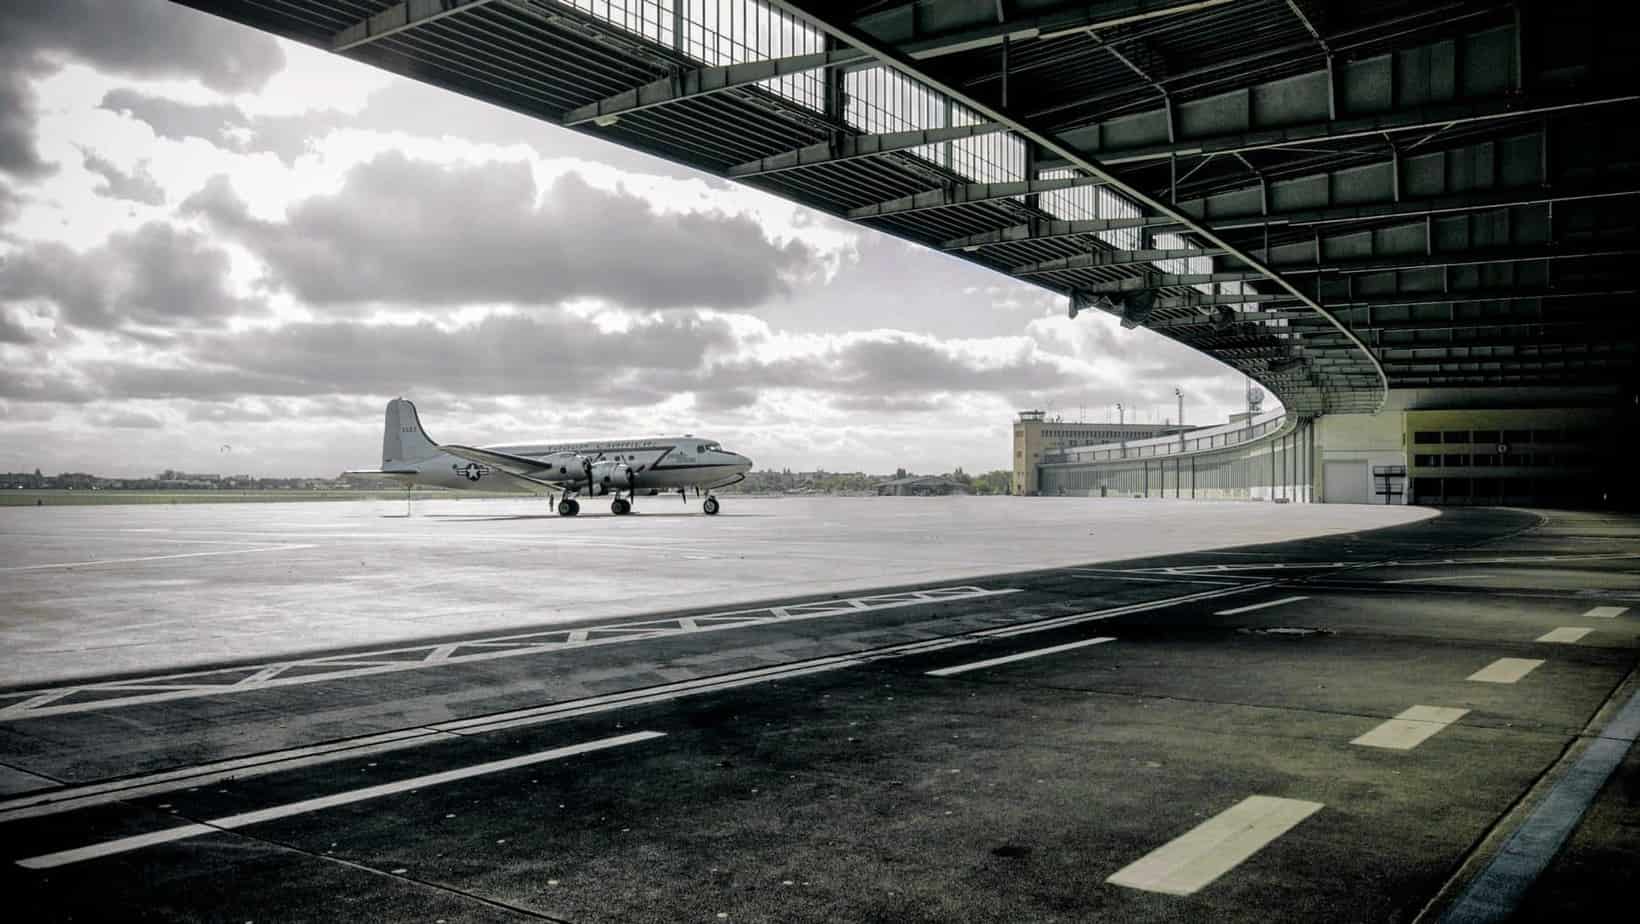 Fototour Flughafen Tempelhof